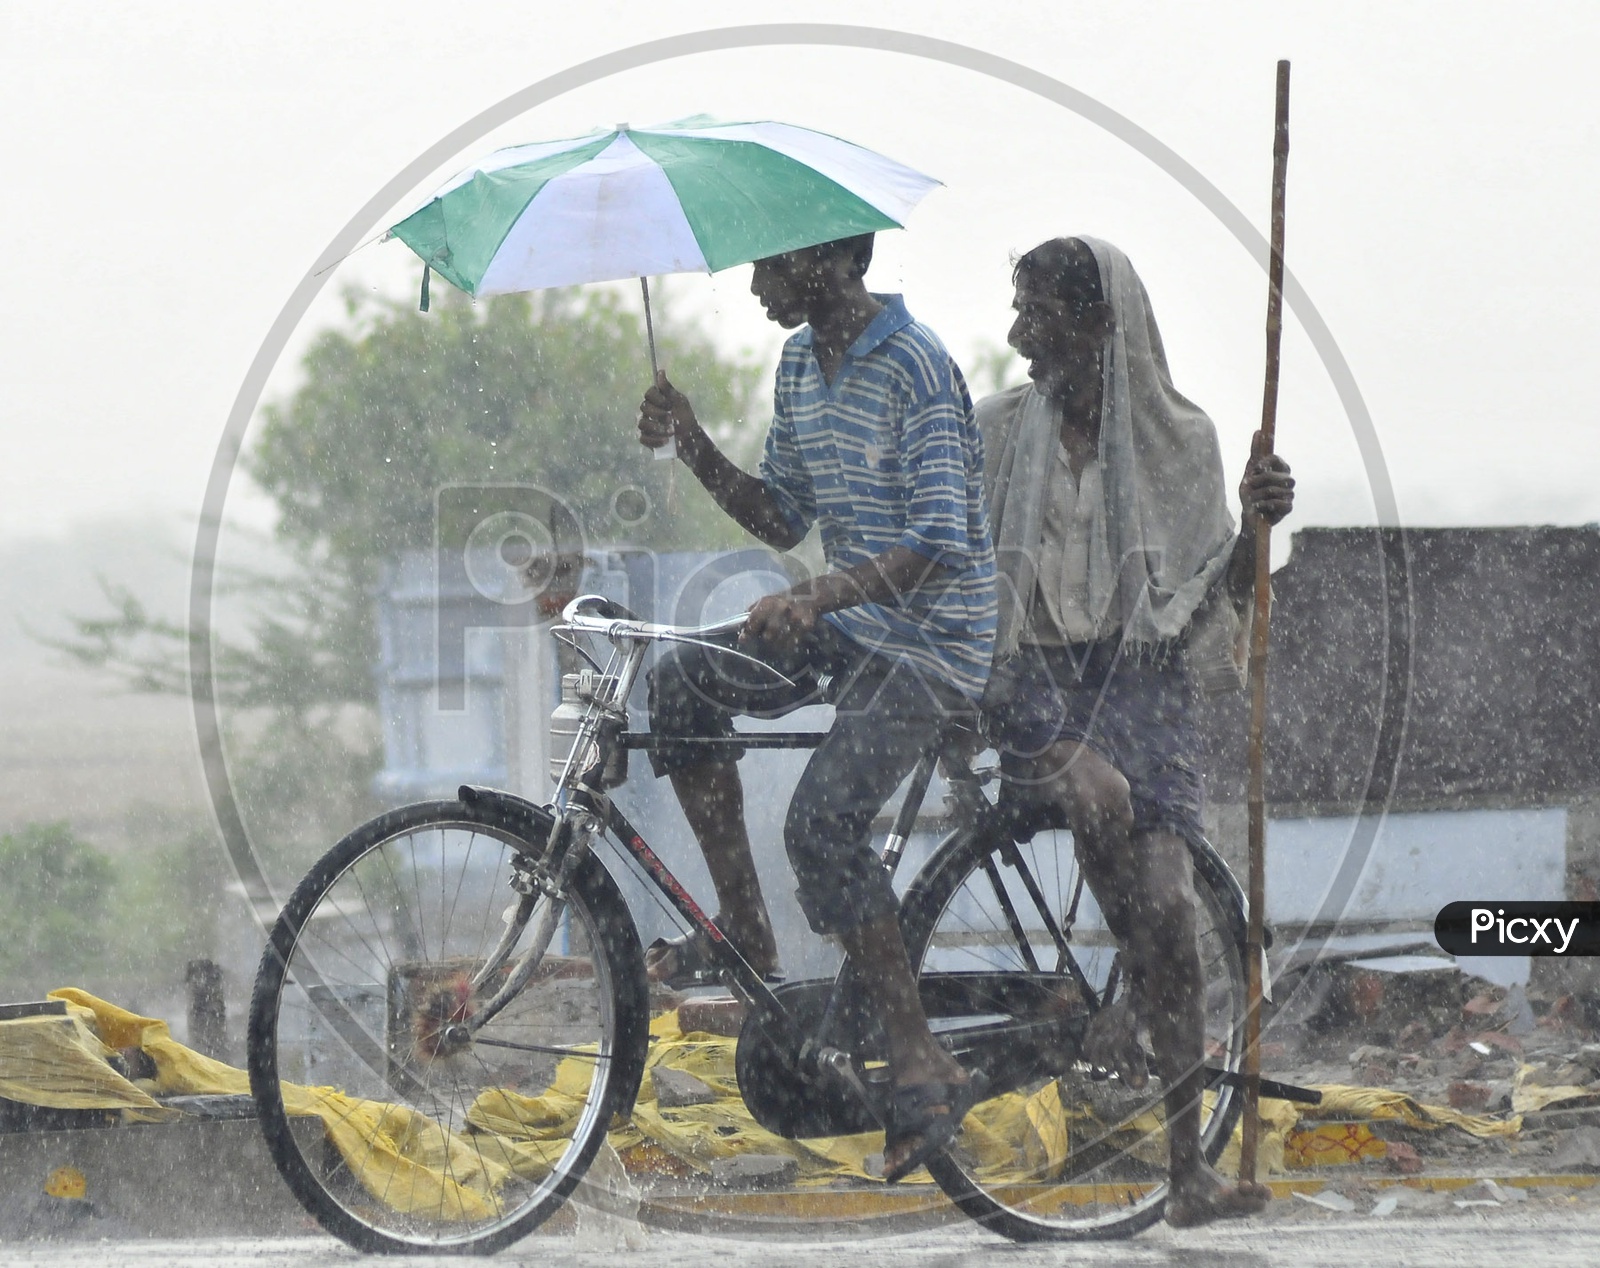 Indian boy riding bicycle holding umbrella during rain